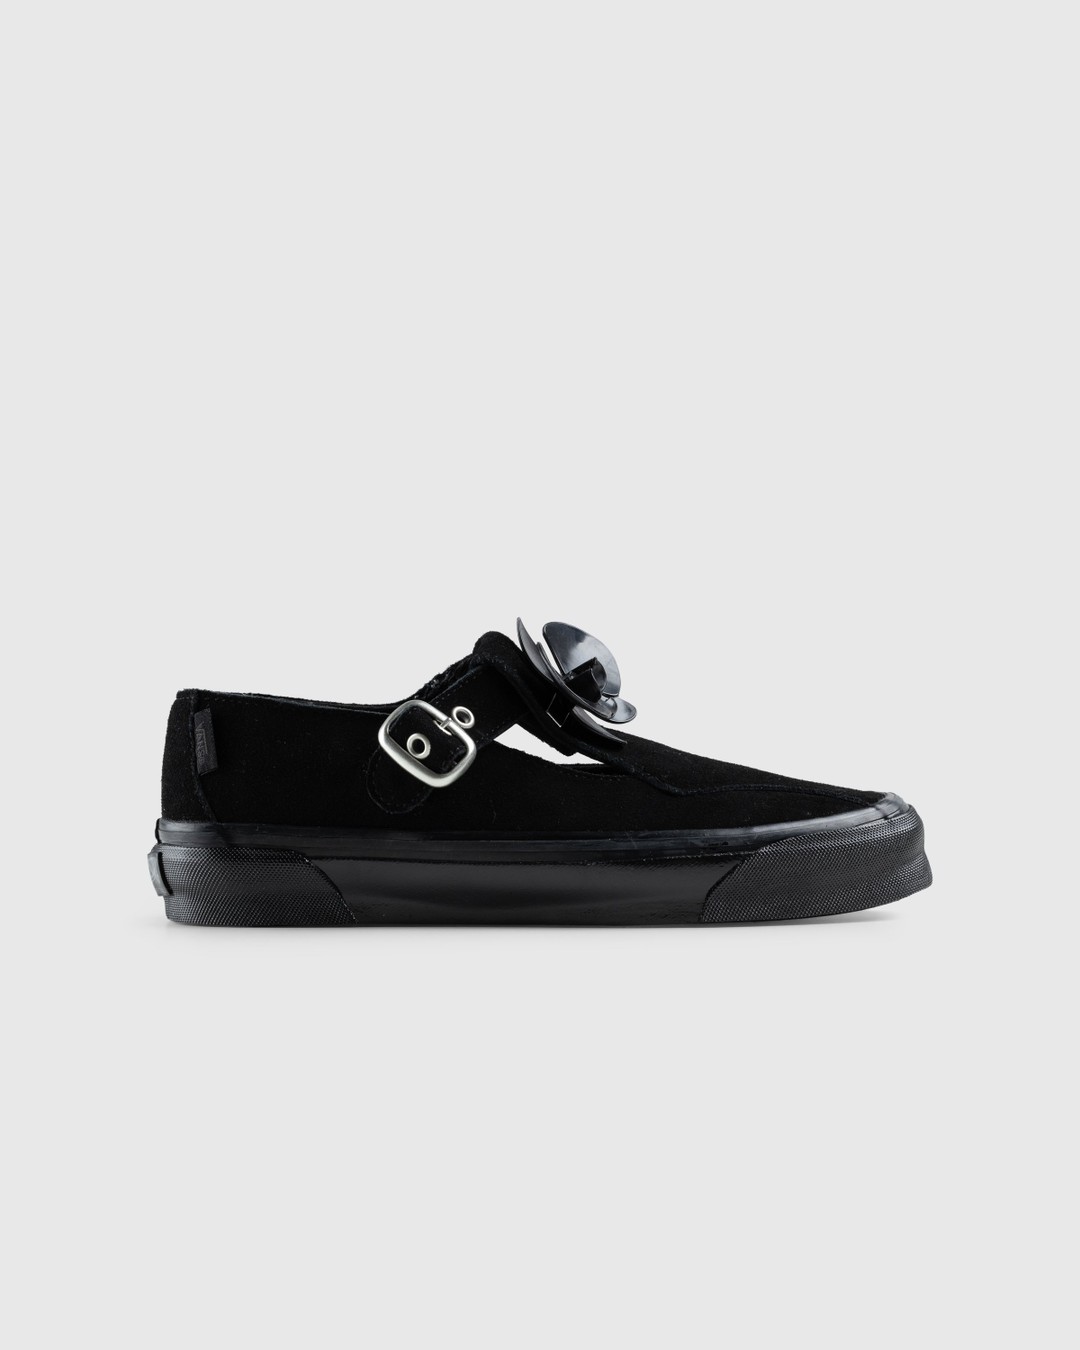 Vans – OG Style 93 LX Black - Sneakers - Black - Image 1